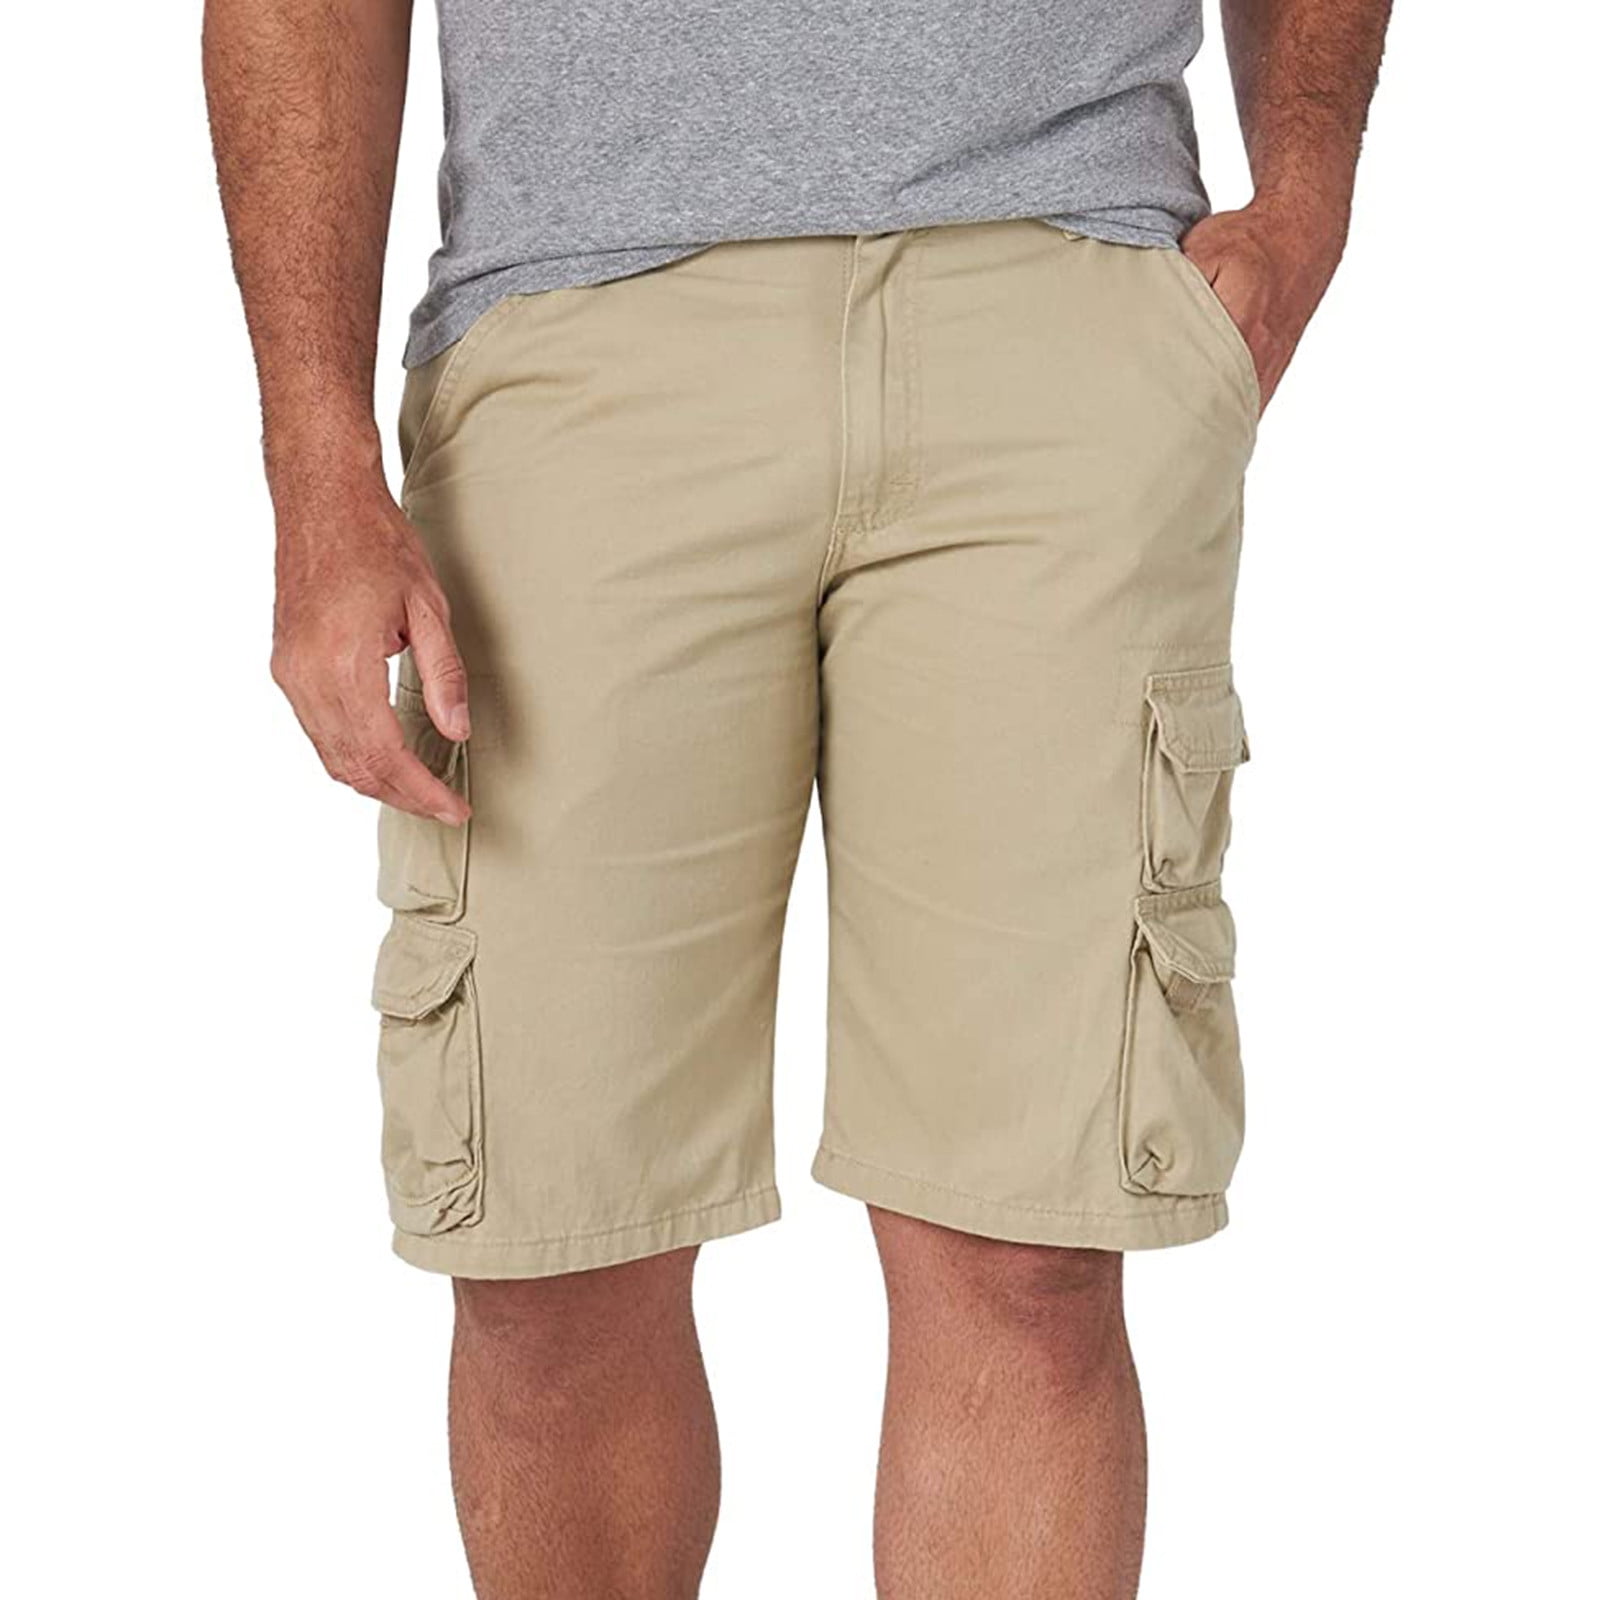 sweat shorts zipper pockets